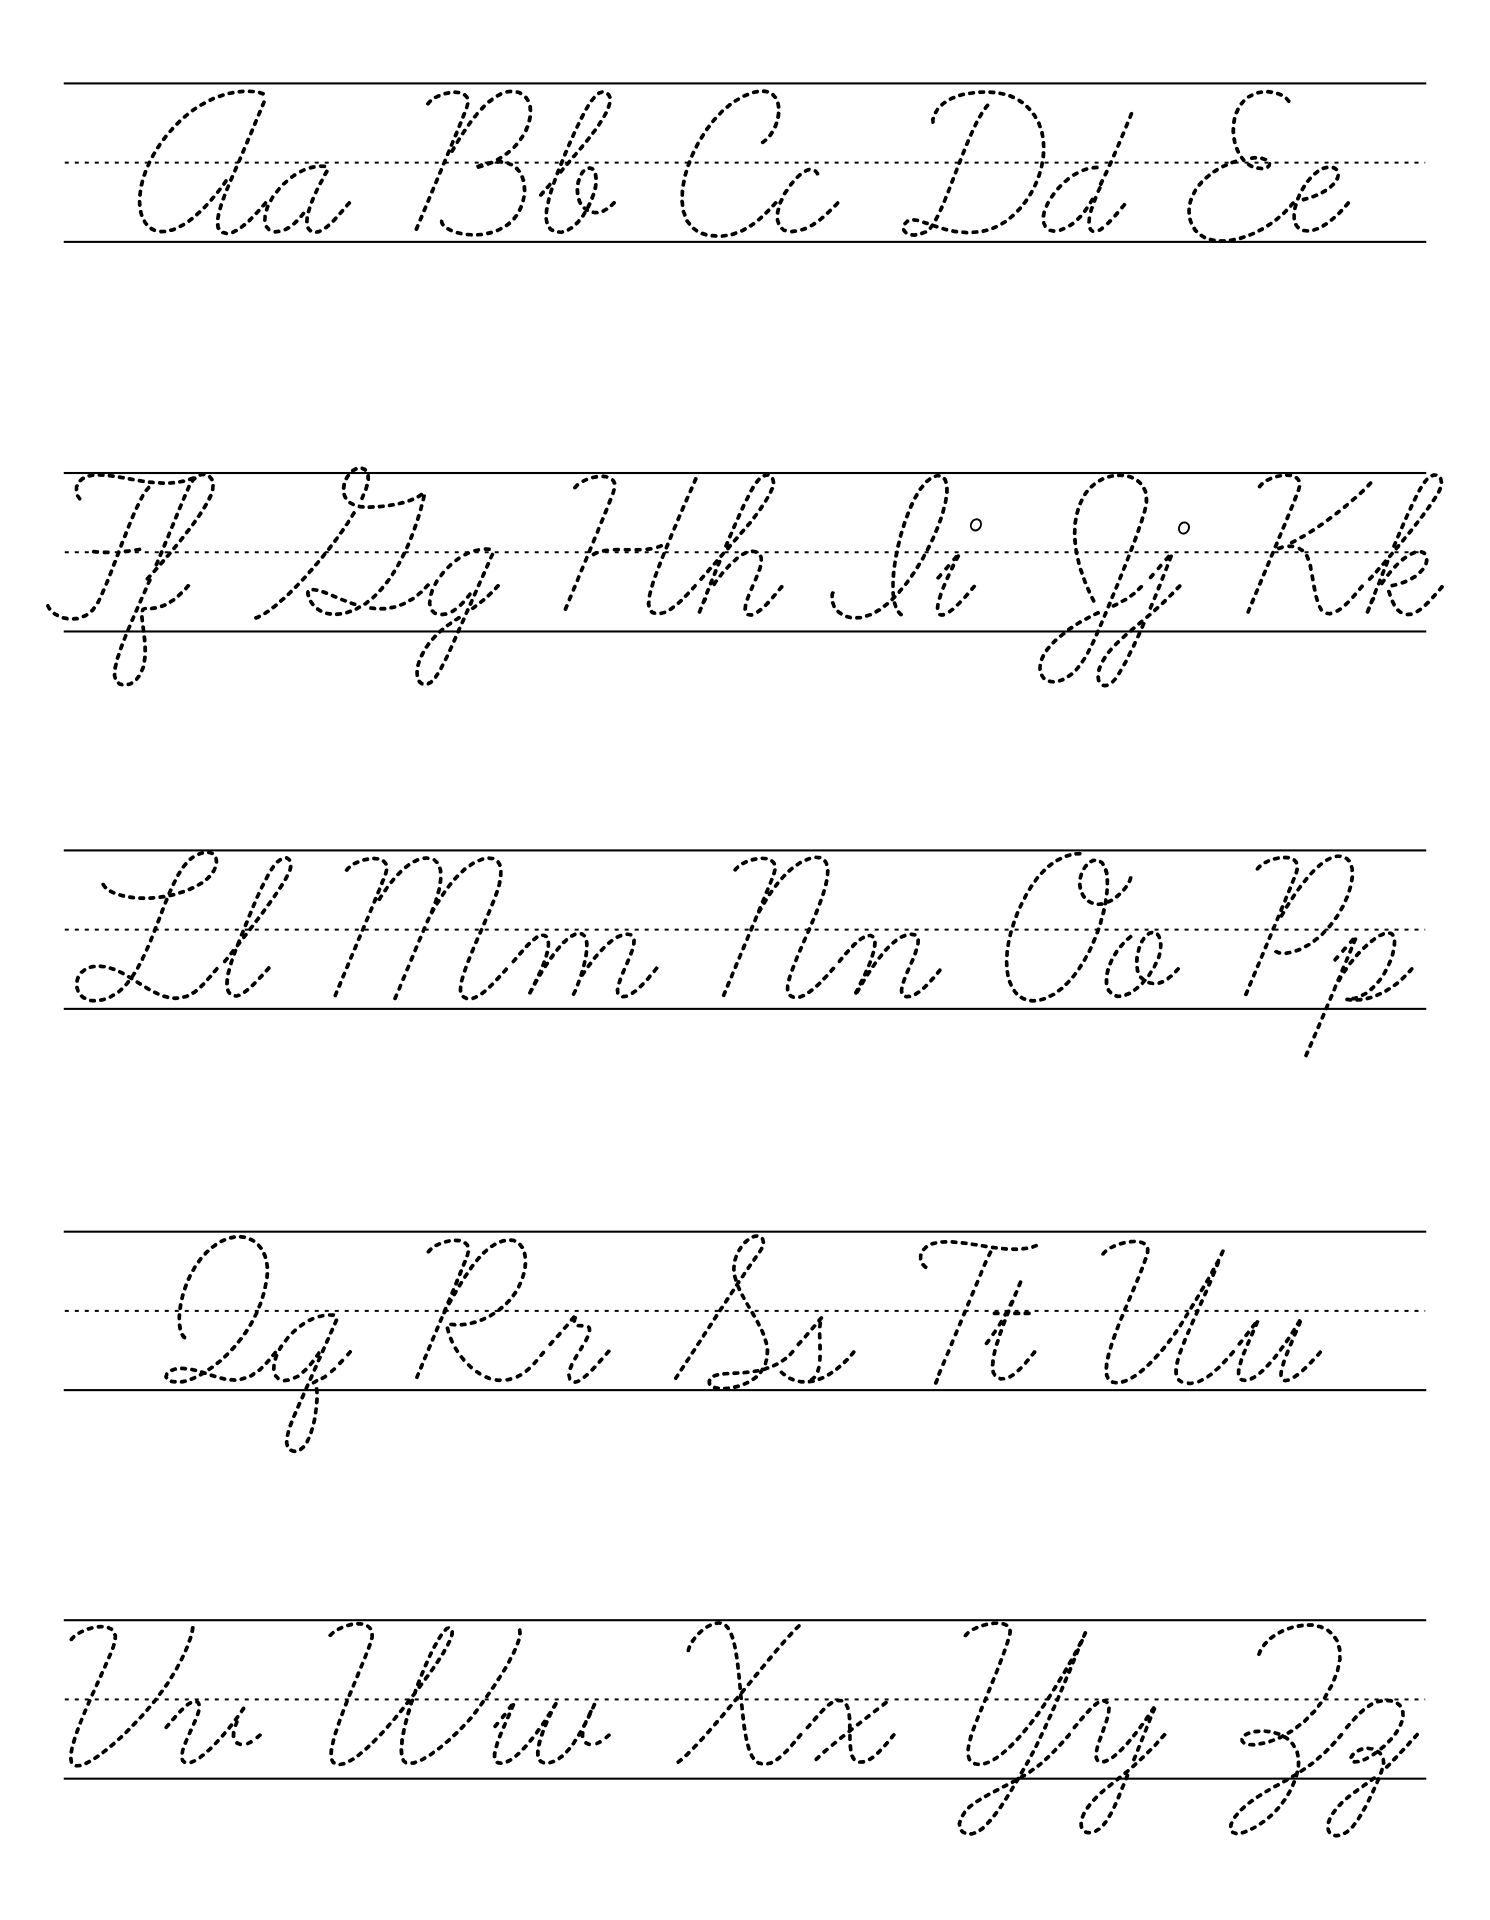 Zaner-Bloser Handwriting Letter Formation